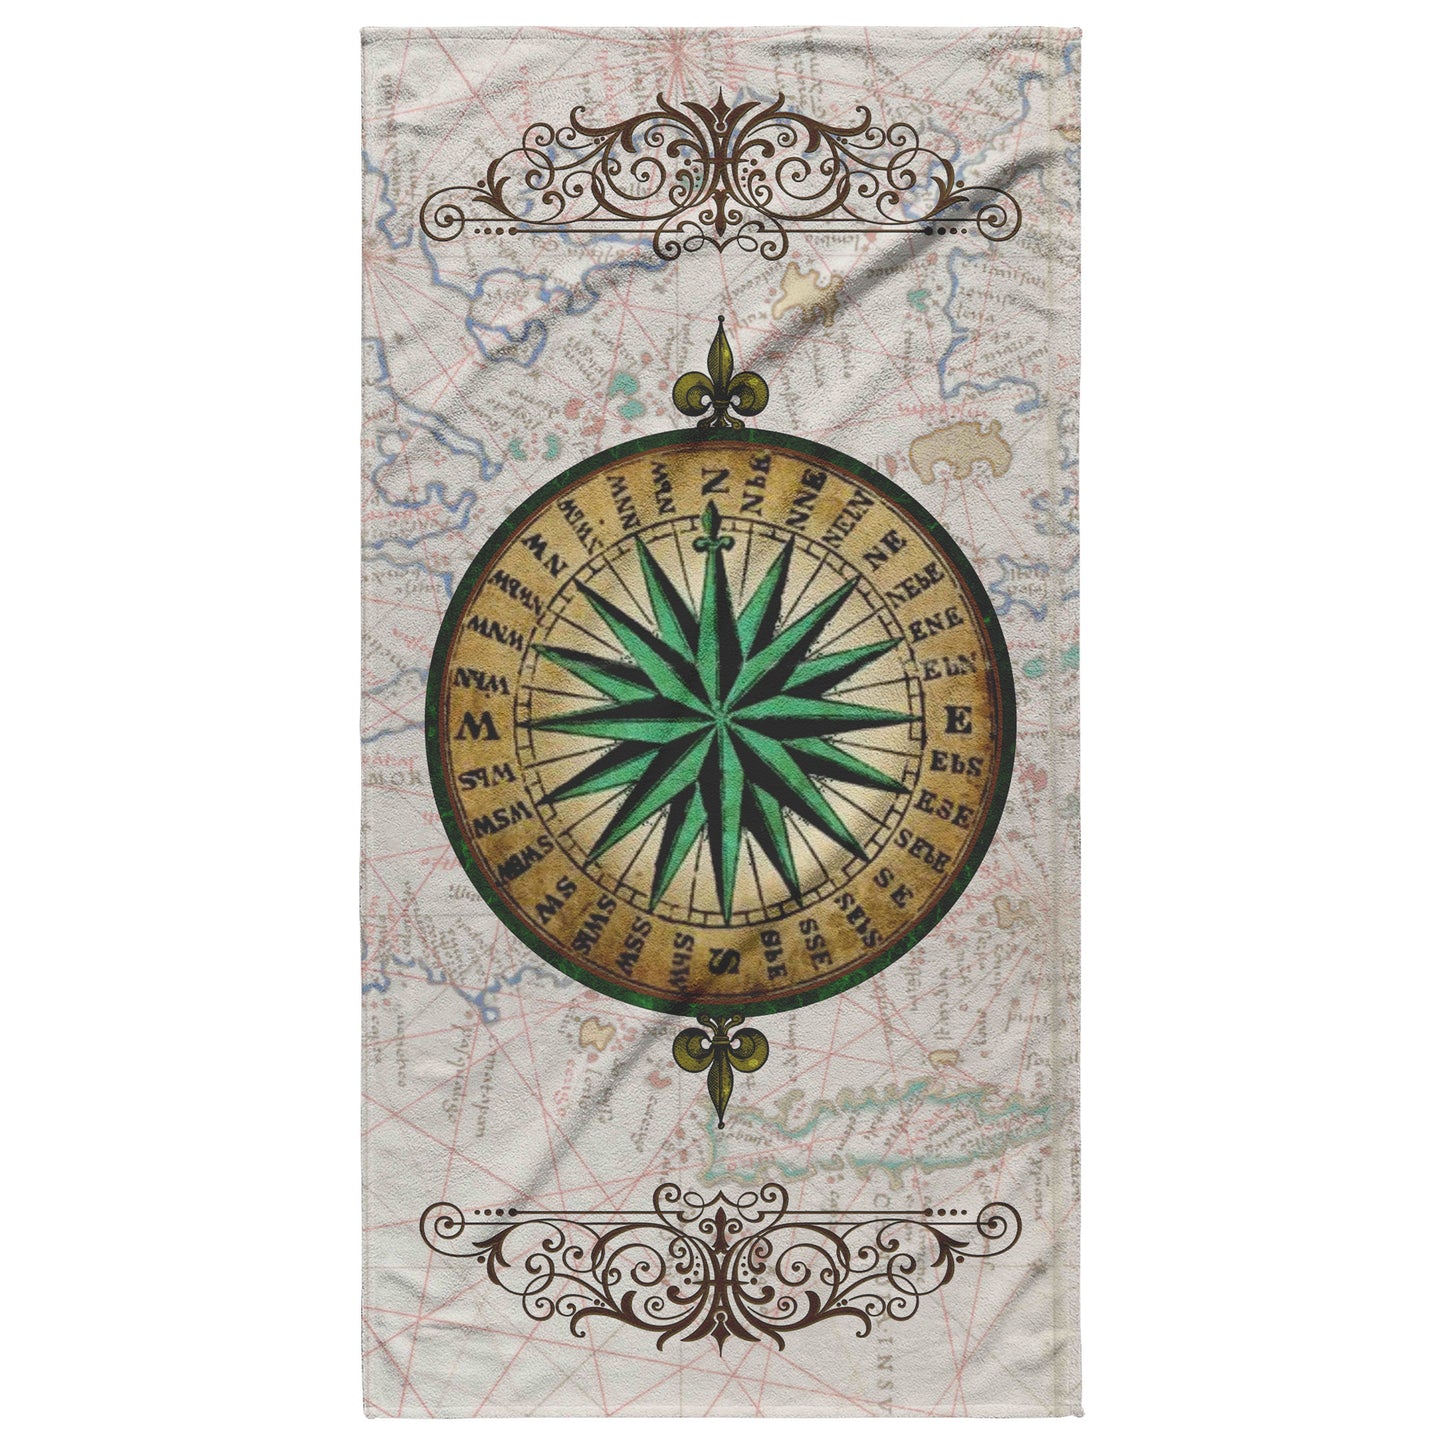 Compass Rose Beath Towel - Green